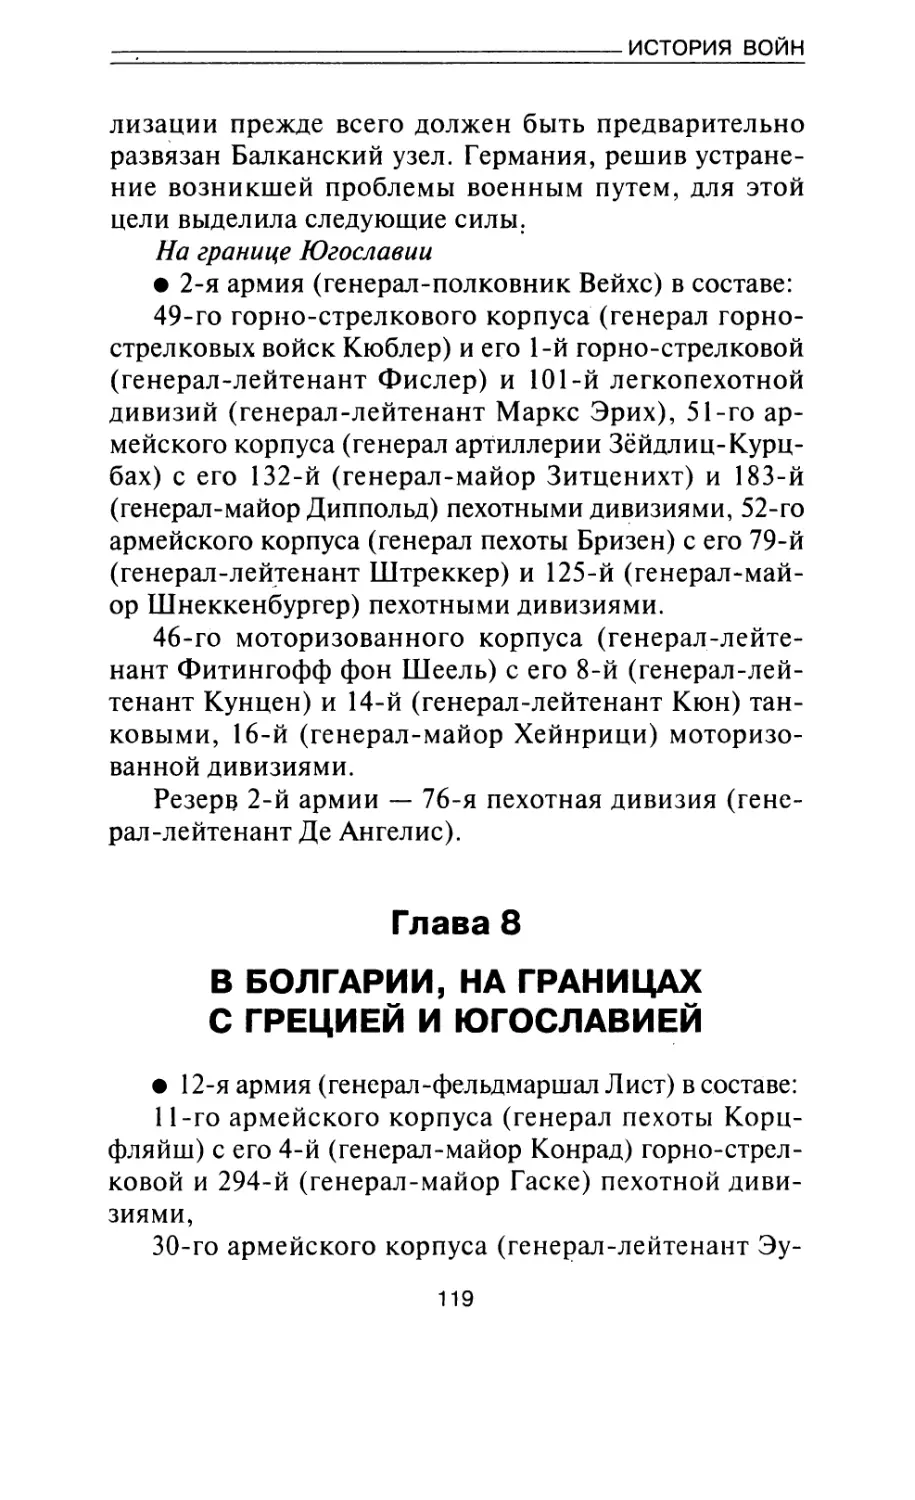 Глава 8. В Болгарии, на границах с Грецией и Югославией. .